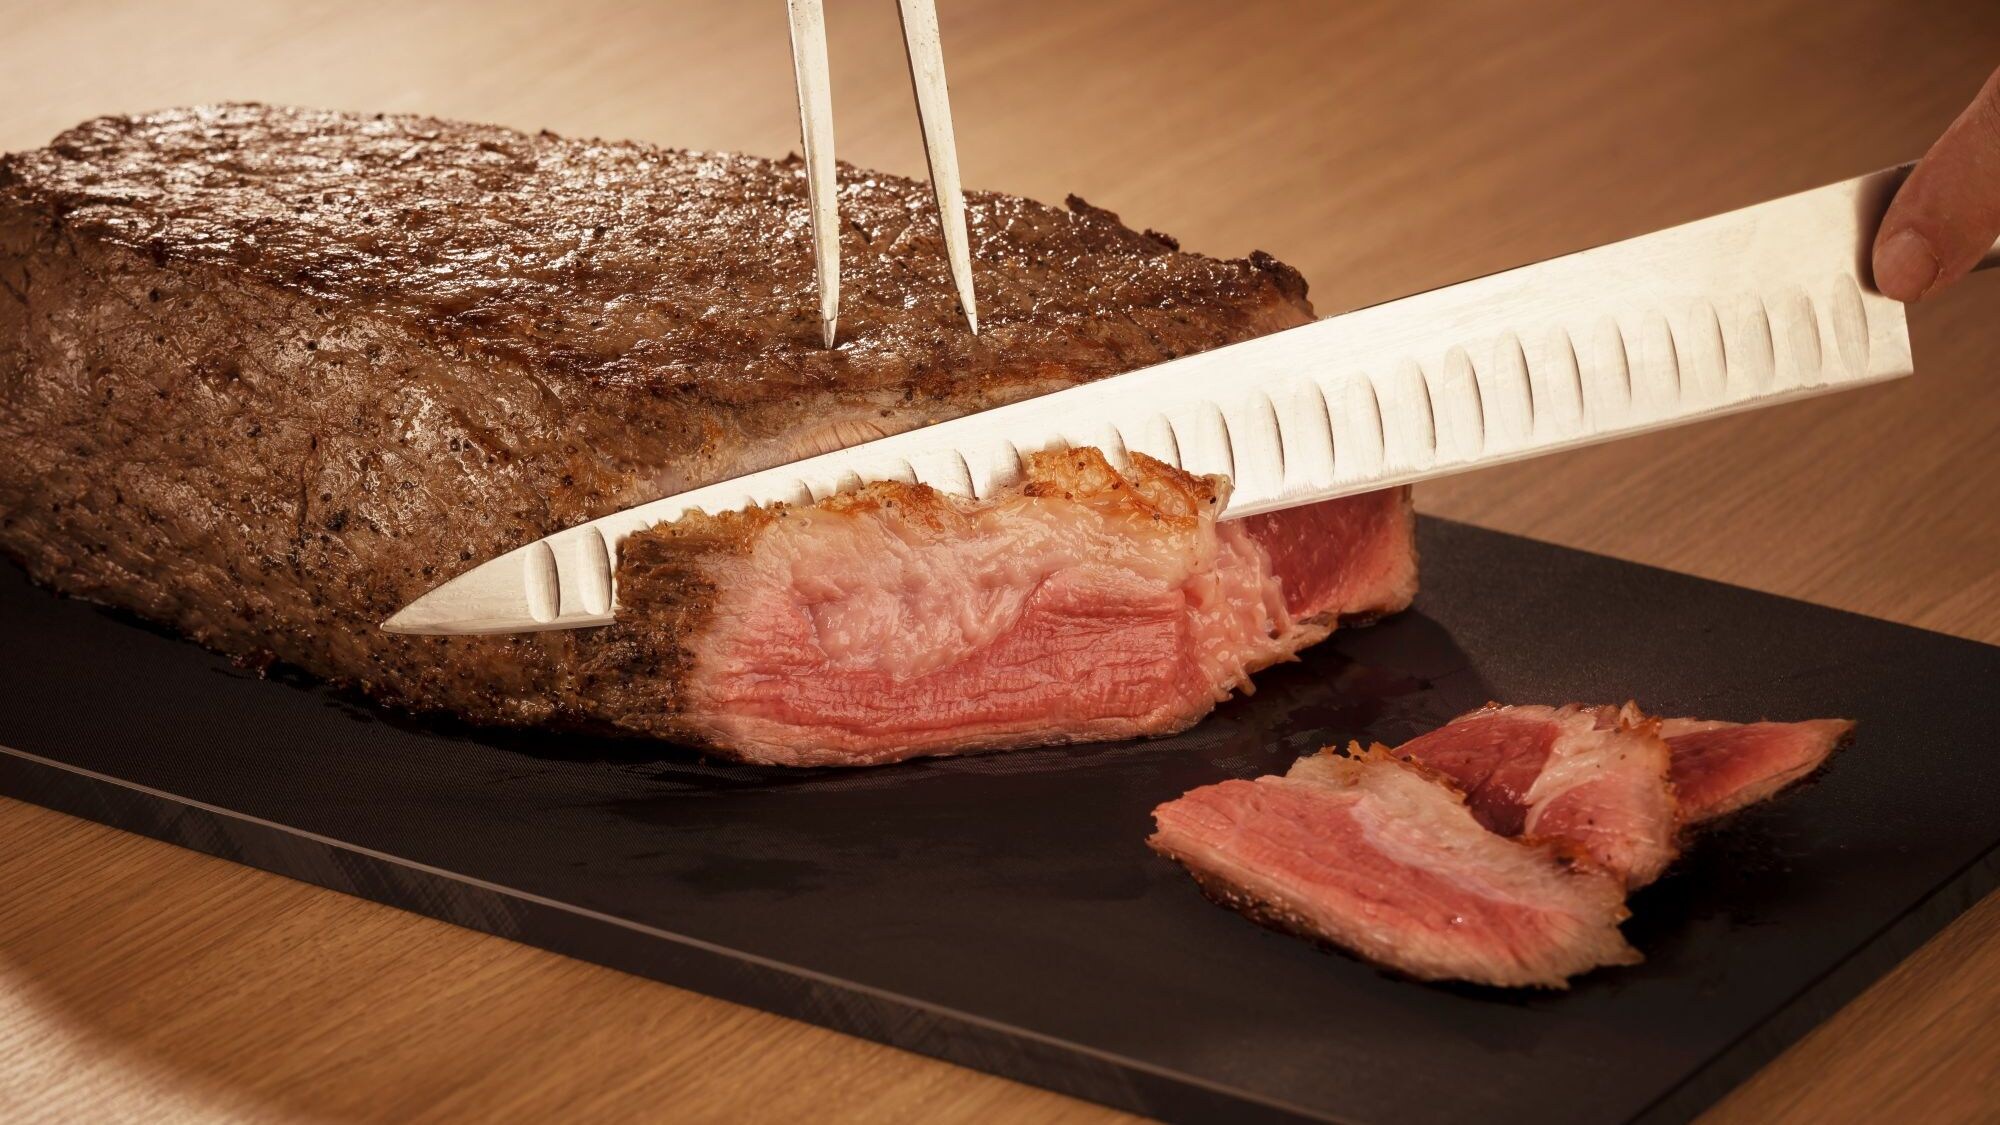 Menu spesial "Panggangan daging sapi gulung domestik" akan dimasak di dapur langsung [prasmanan makan malam]